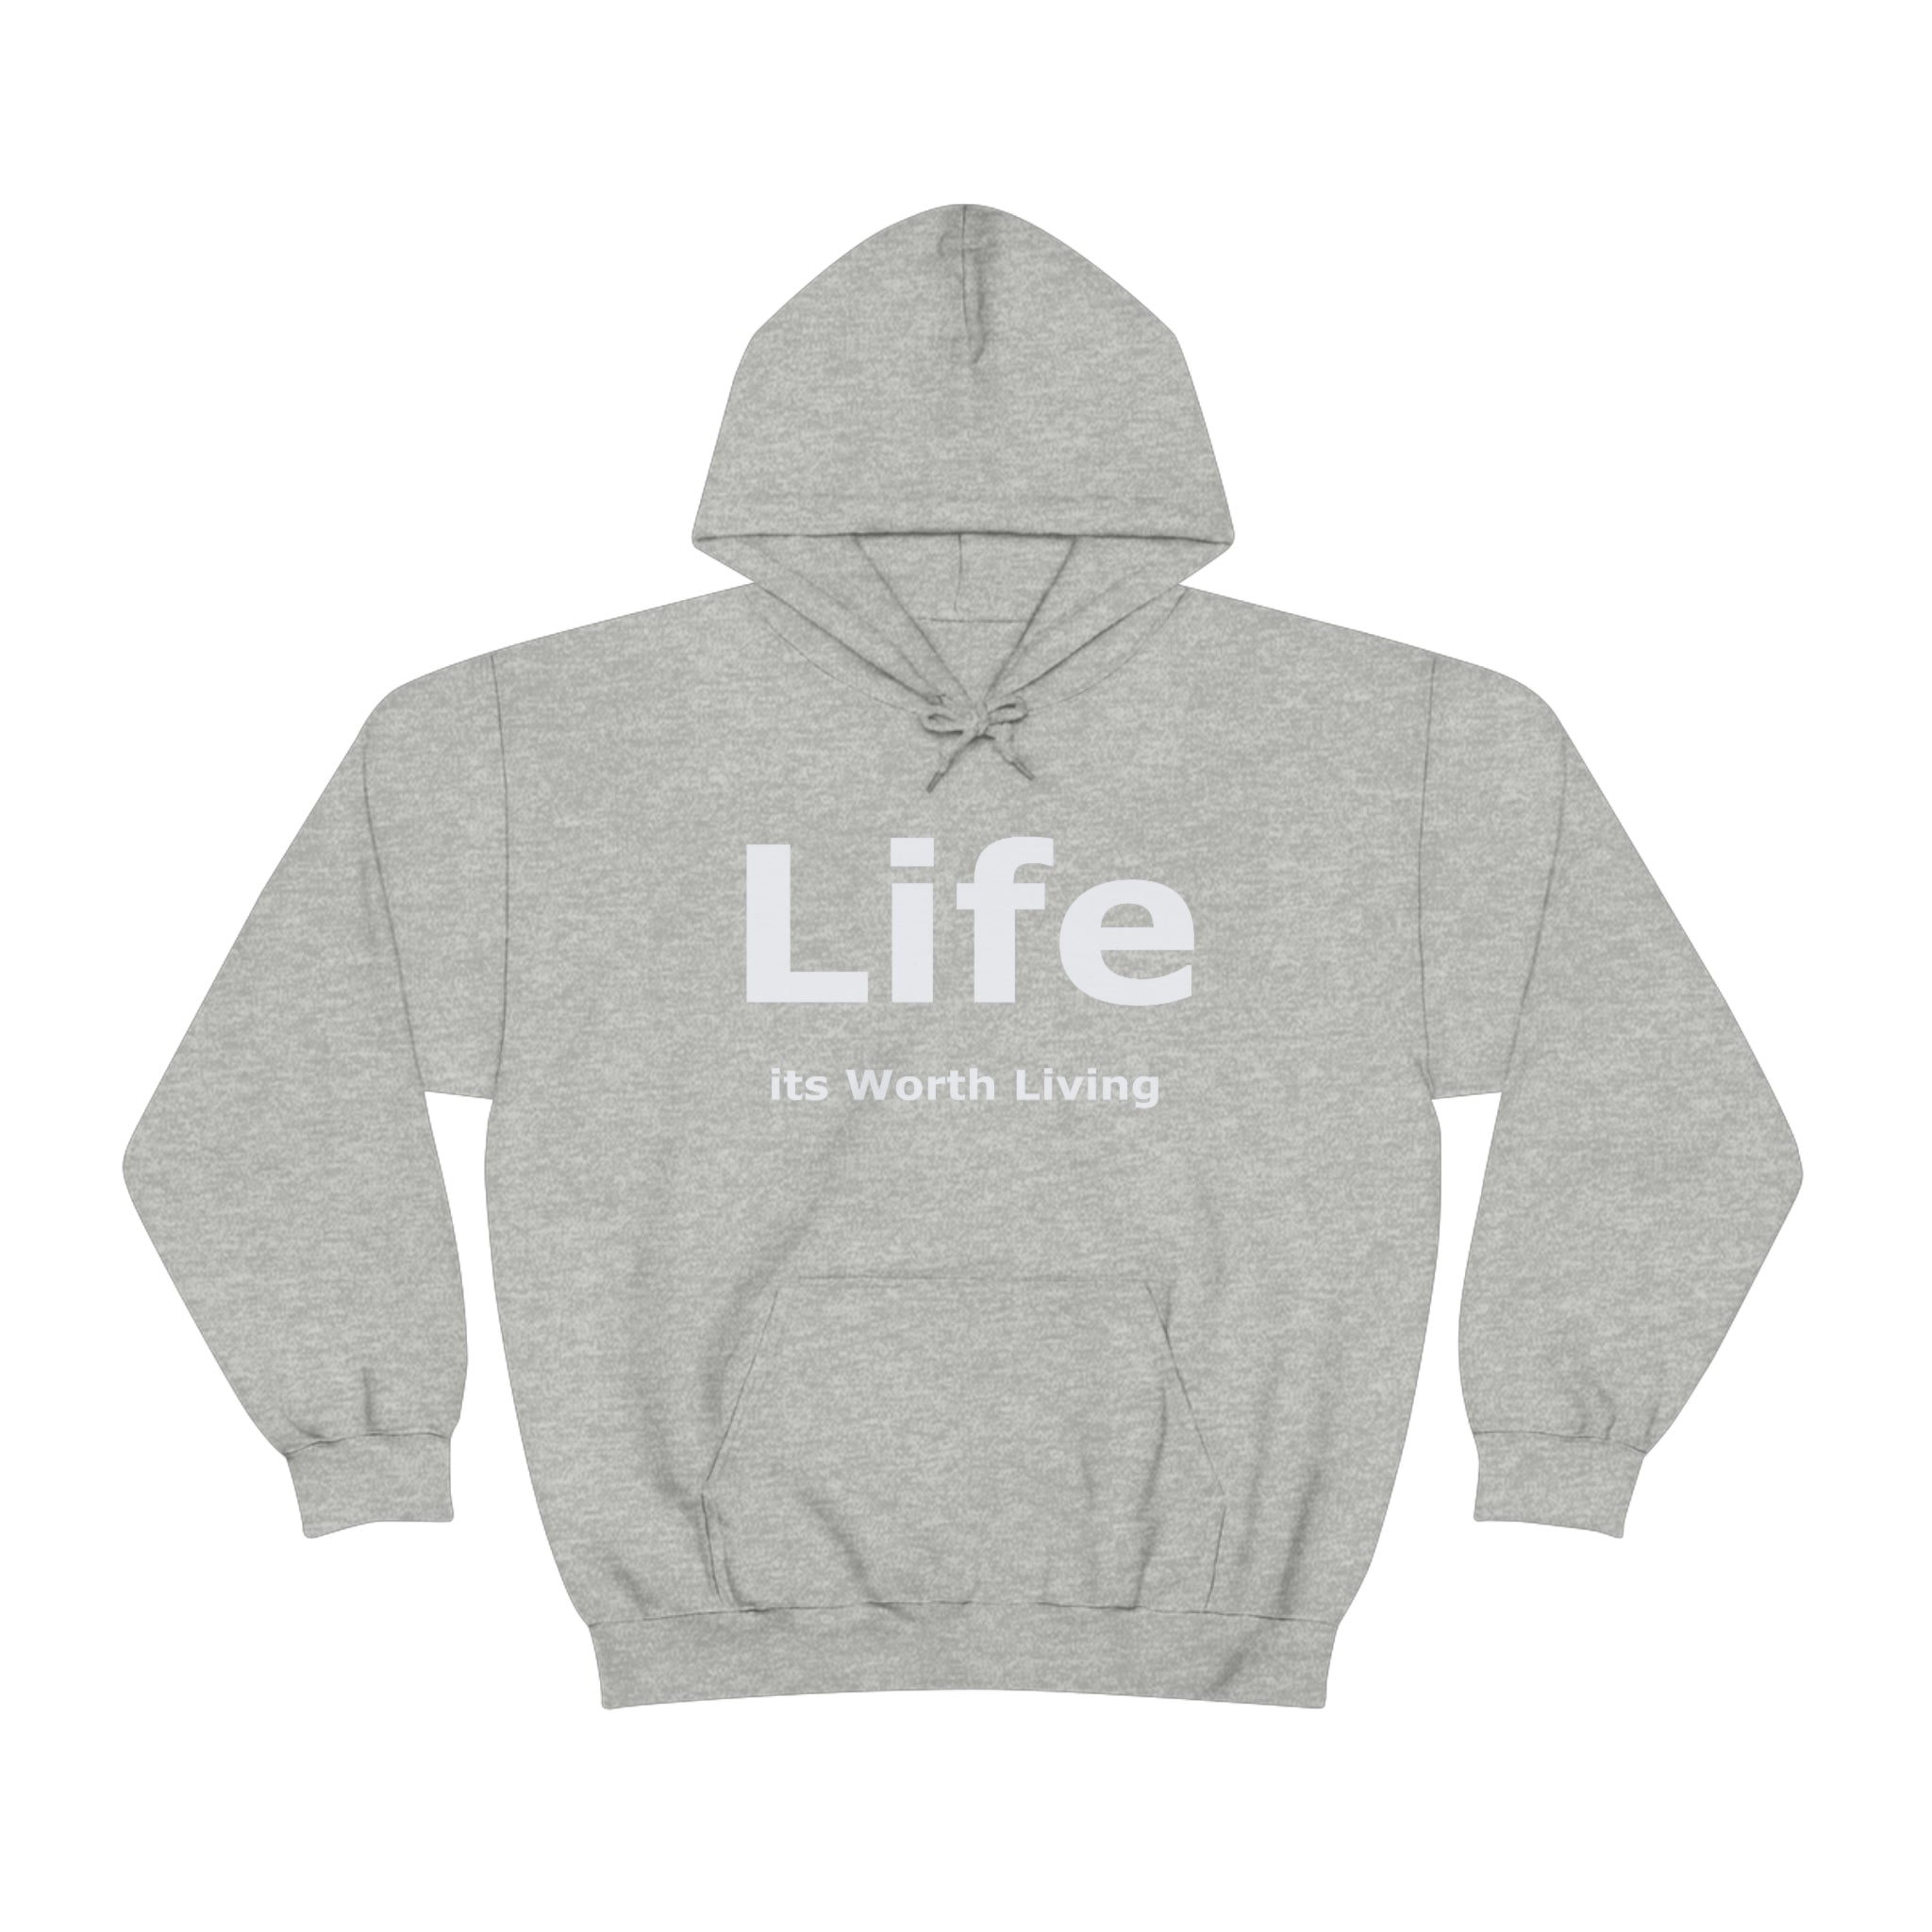 Life its worth living Hooded Sweatshirt